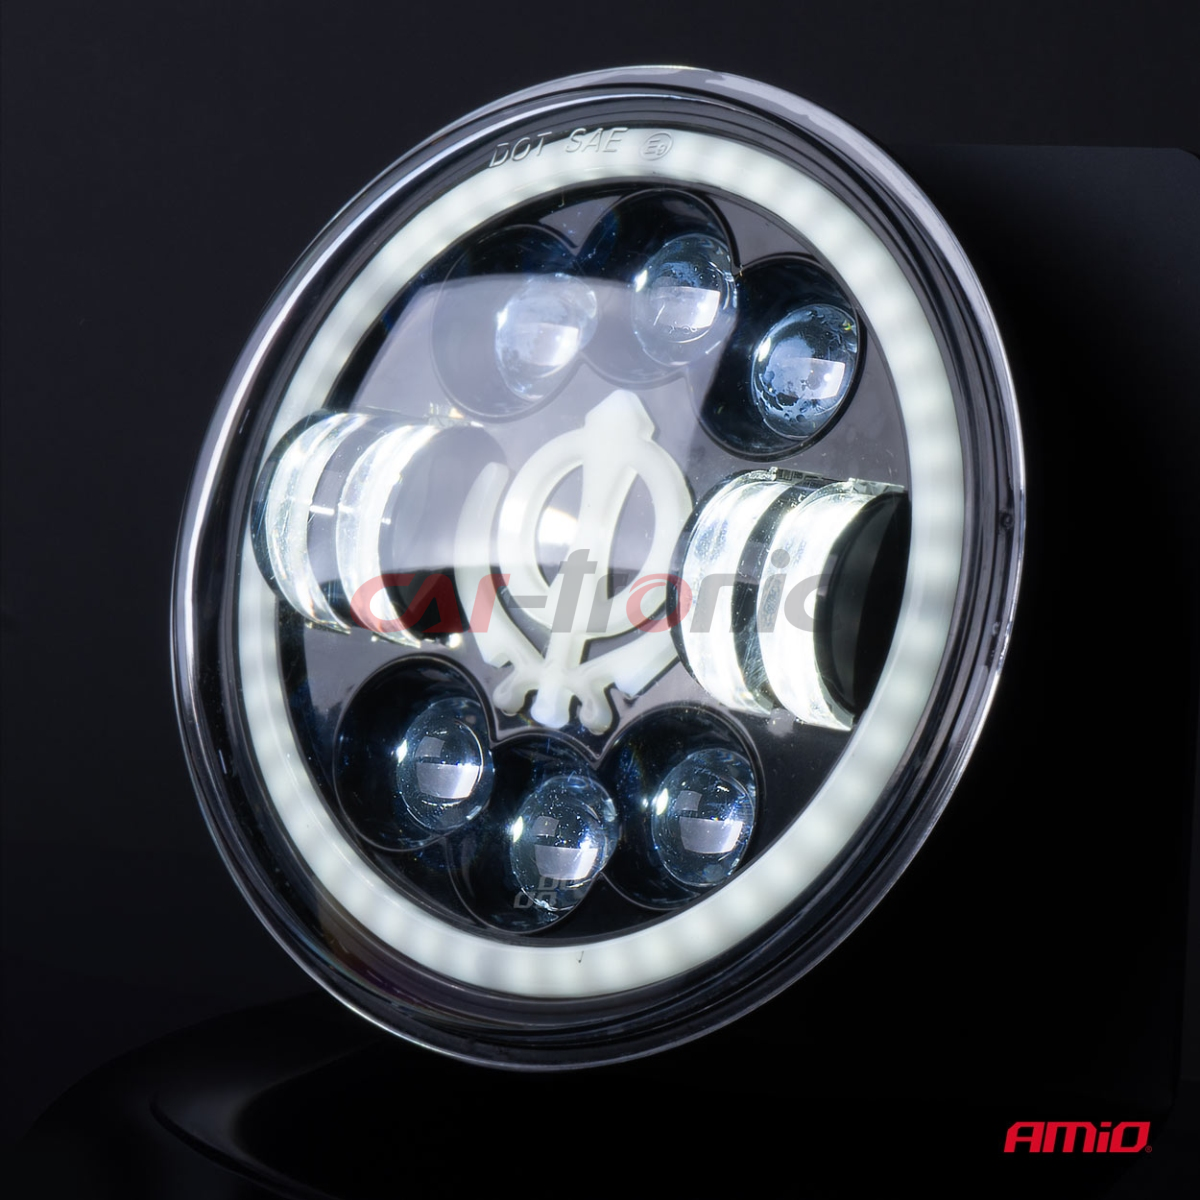 Lampa robocza LED GHOST duch dodatkowa ozdobna AMIO-03696